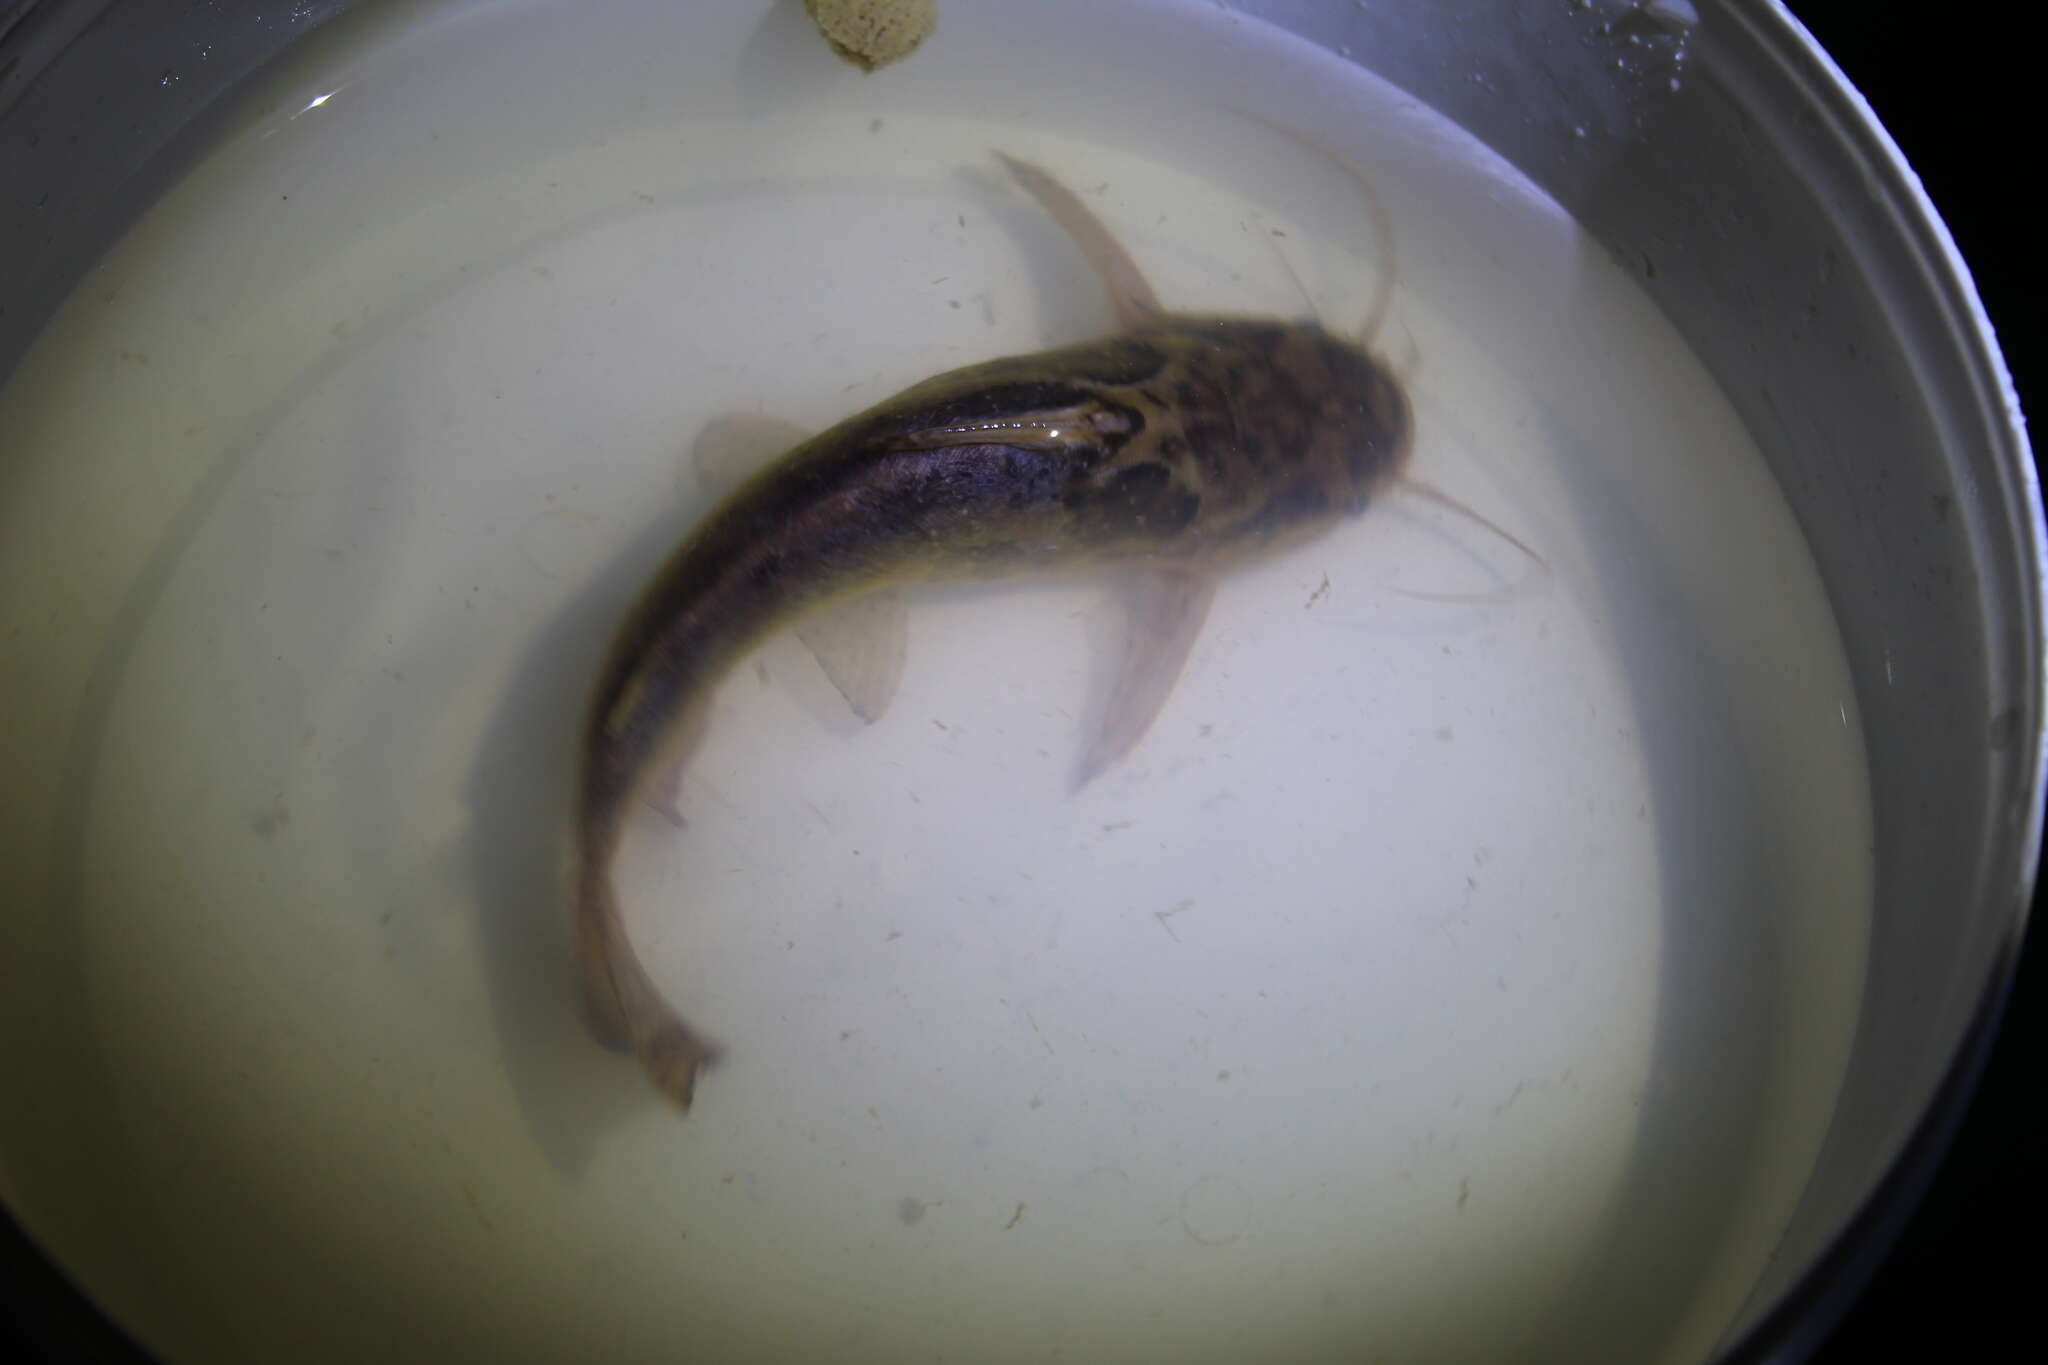 Image of Southern driftwood catfish